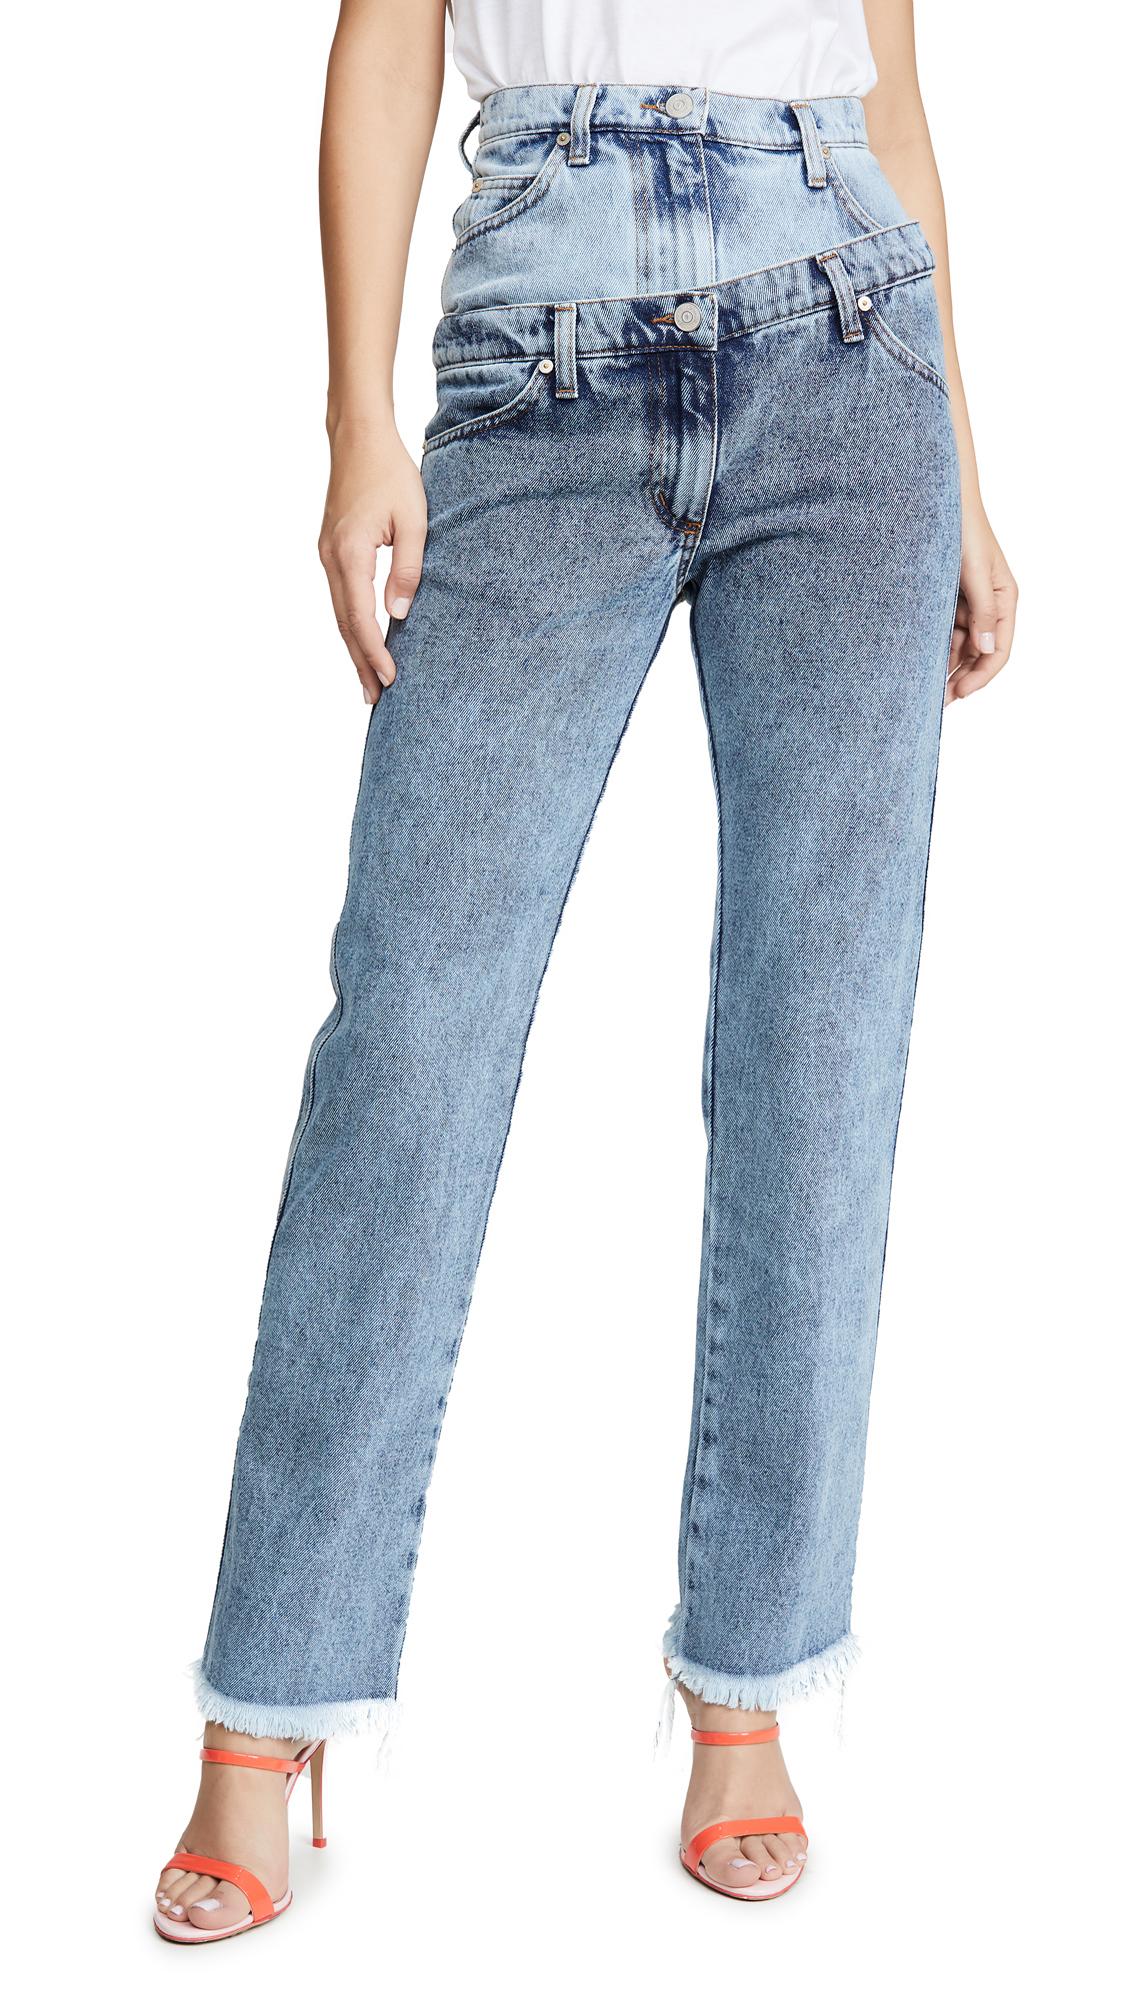 Natasha Zinko Double Waist Asymmetric Jeans in Blue | Lyst